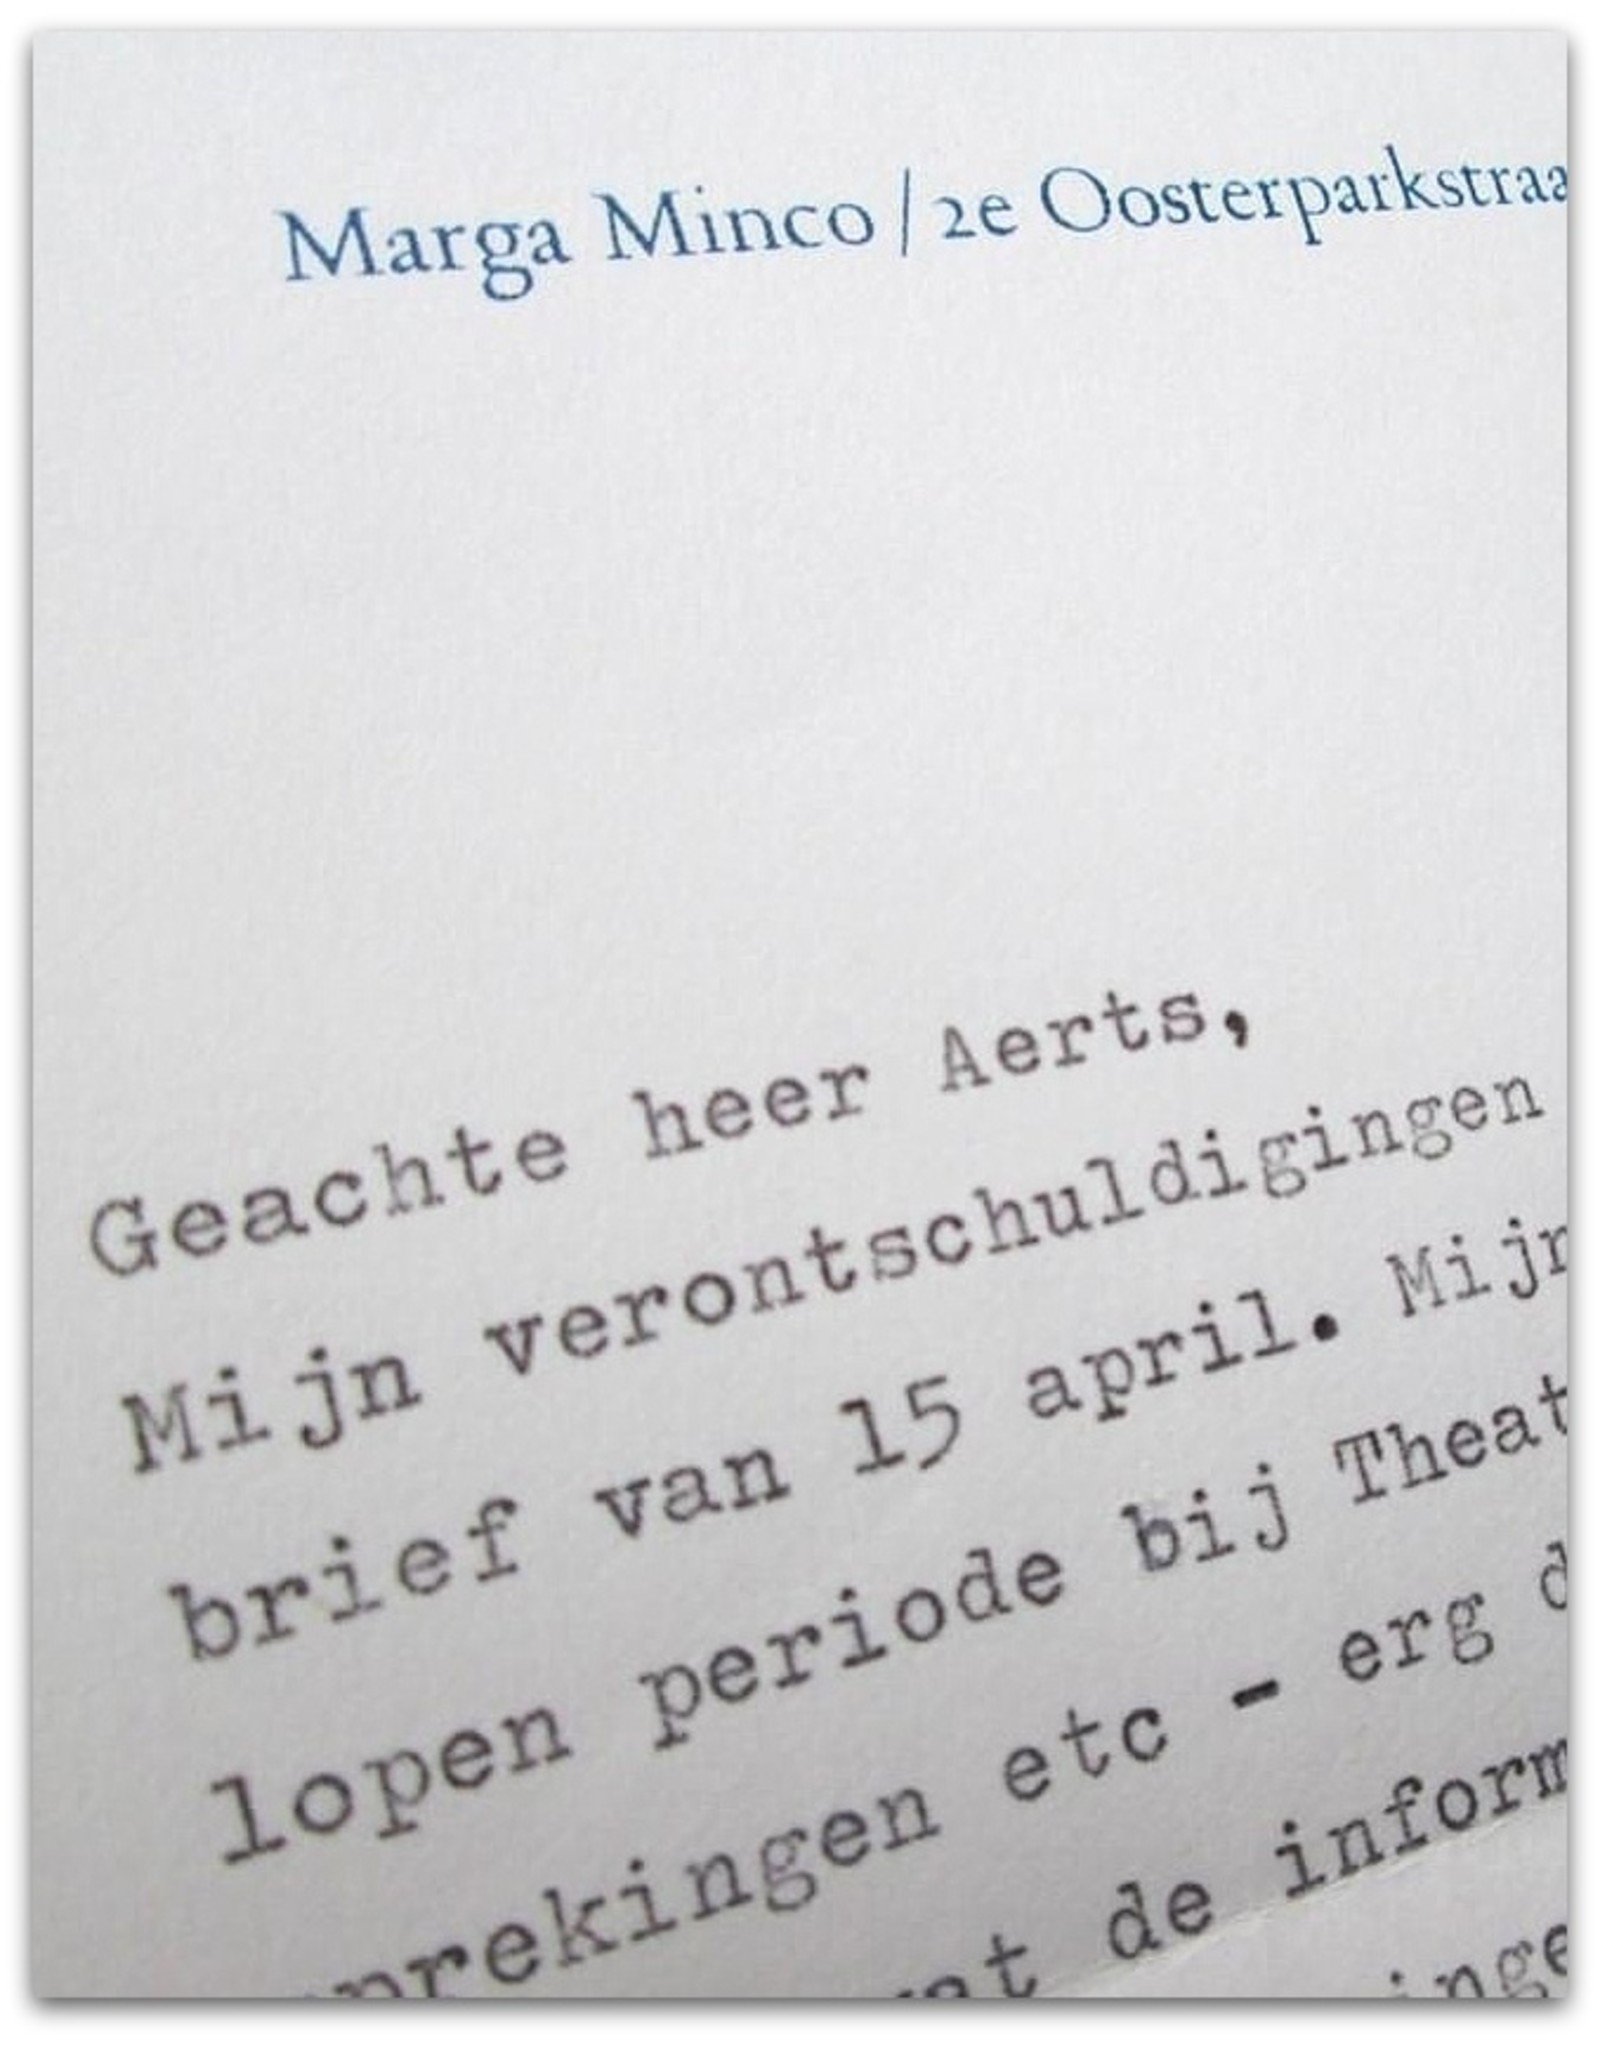 Marga Minco - Geachte heer Aerts,  [Original letter in typescript]